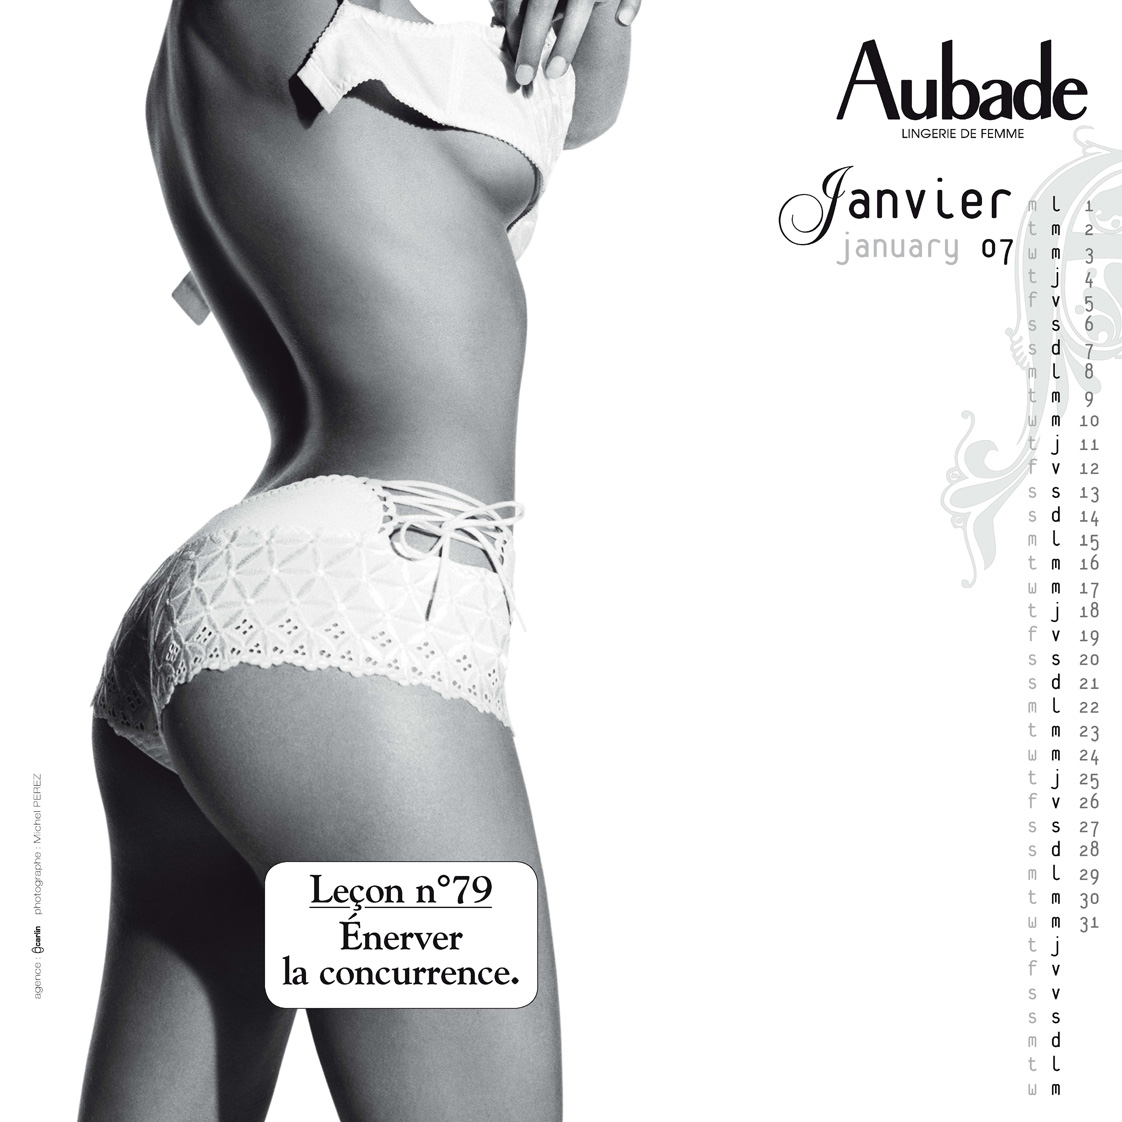 Calendrier Aubade 2007 - 01 Janvier